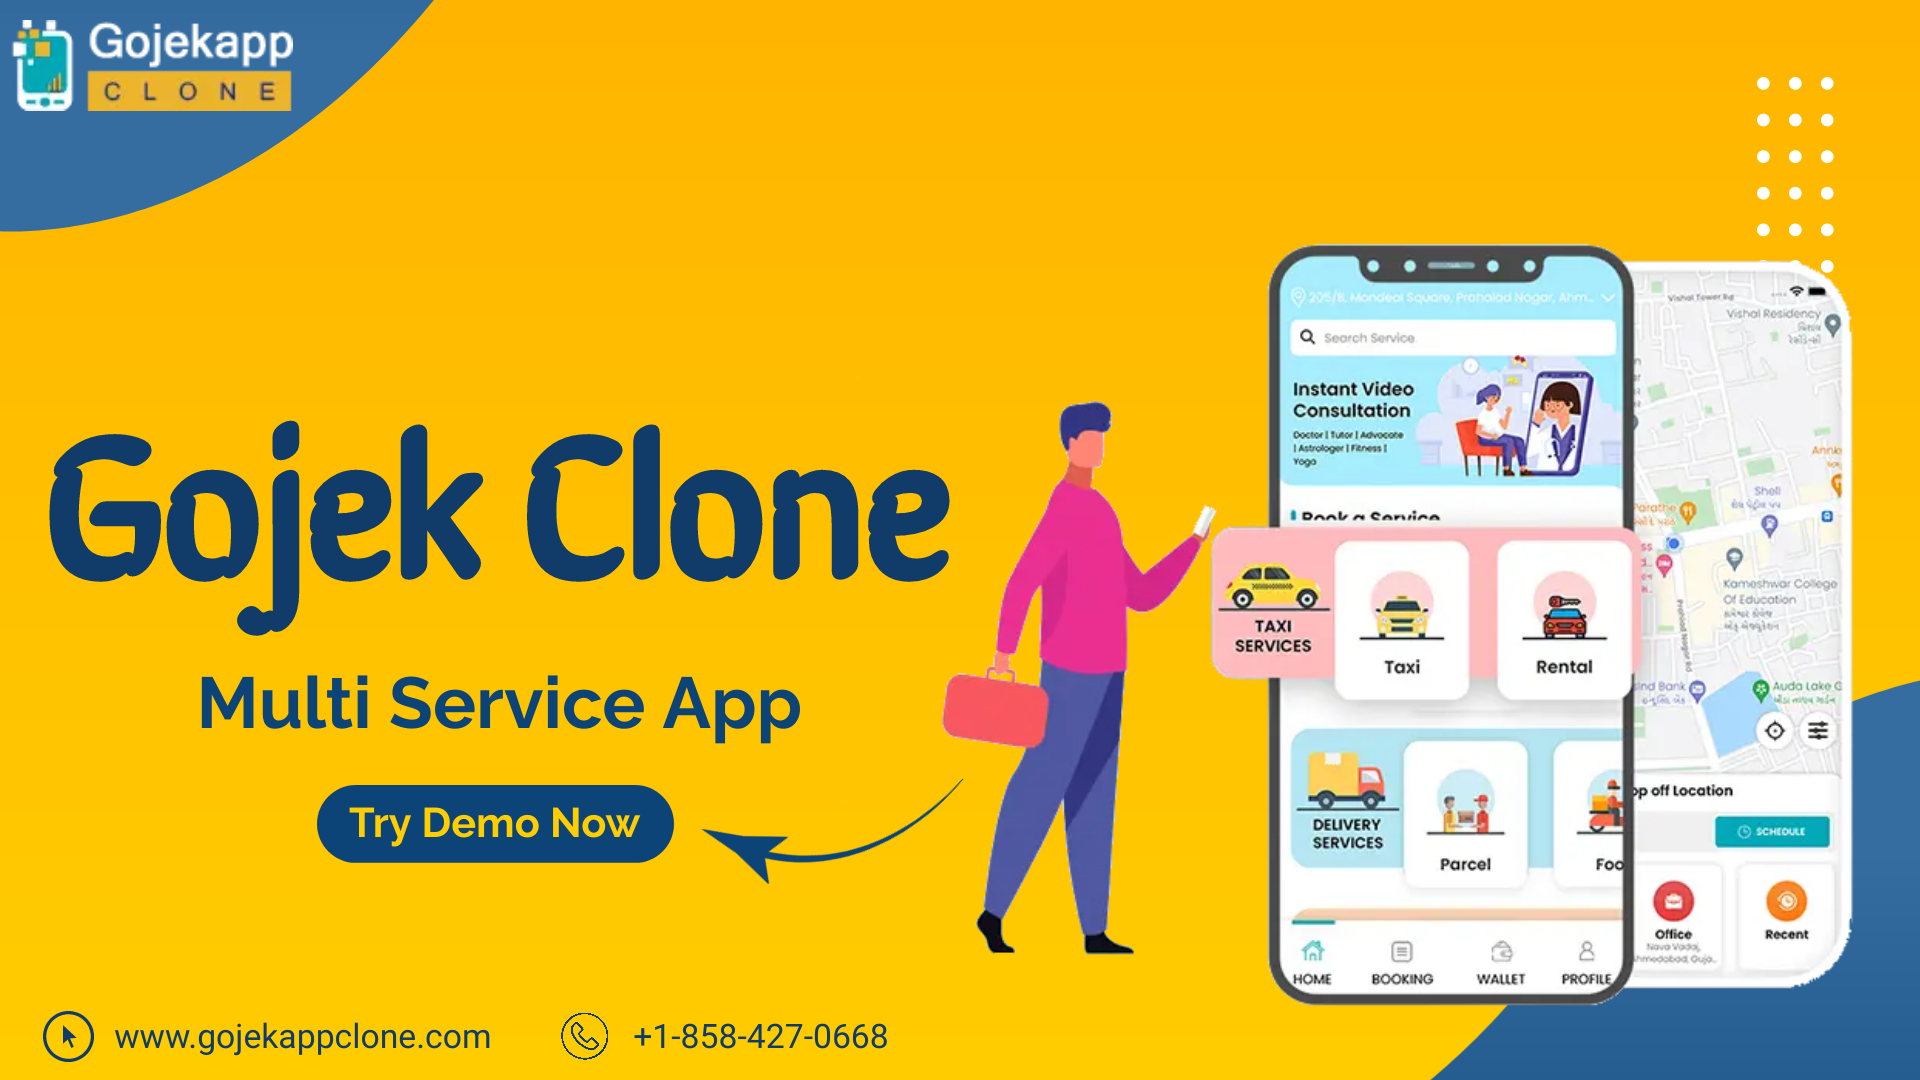 Success Factors Of Online On-demand Business Using Gojek Clone